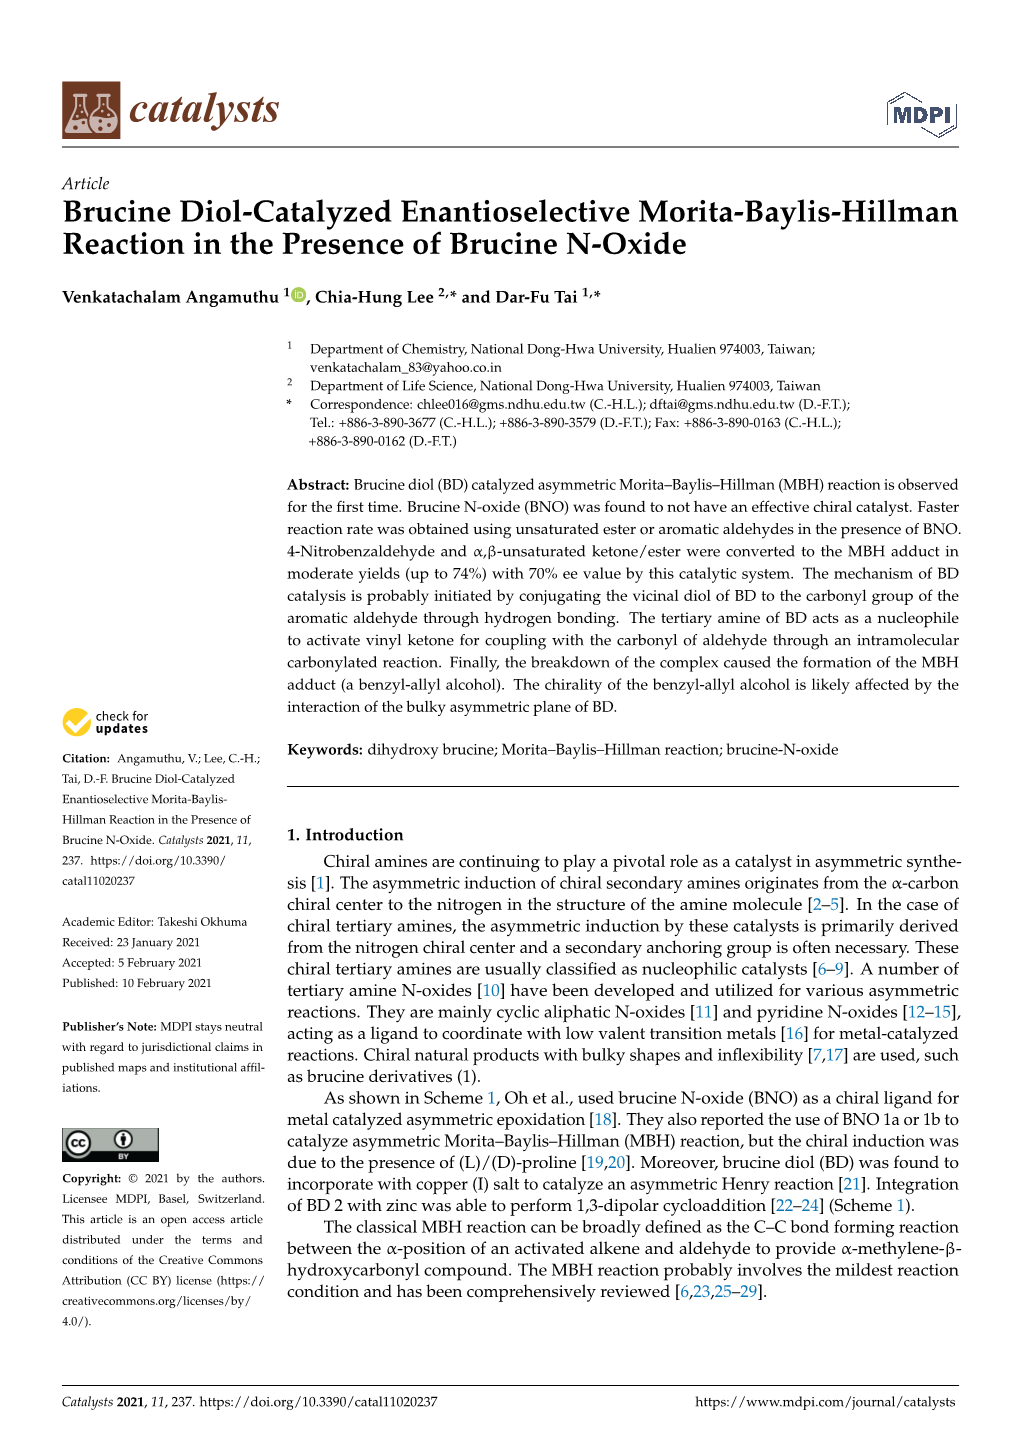 Brucine Diol-Catalyzed Enantioselective Morita-Baylis-Hillman Reaction in the Presence of Brucine N-Oxide